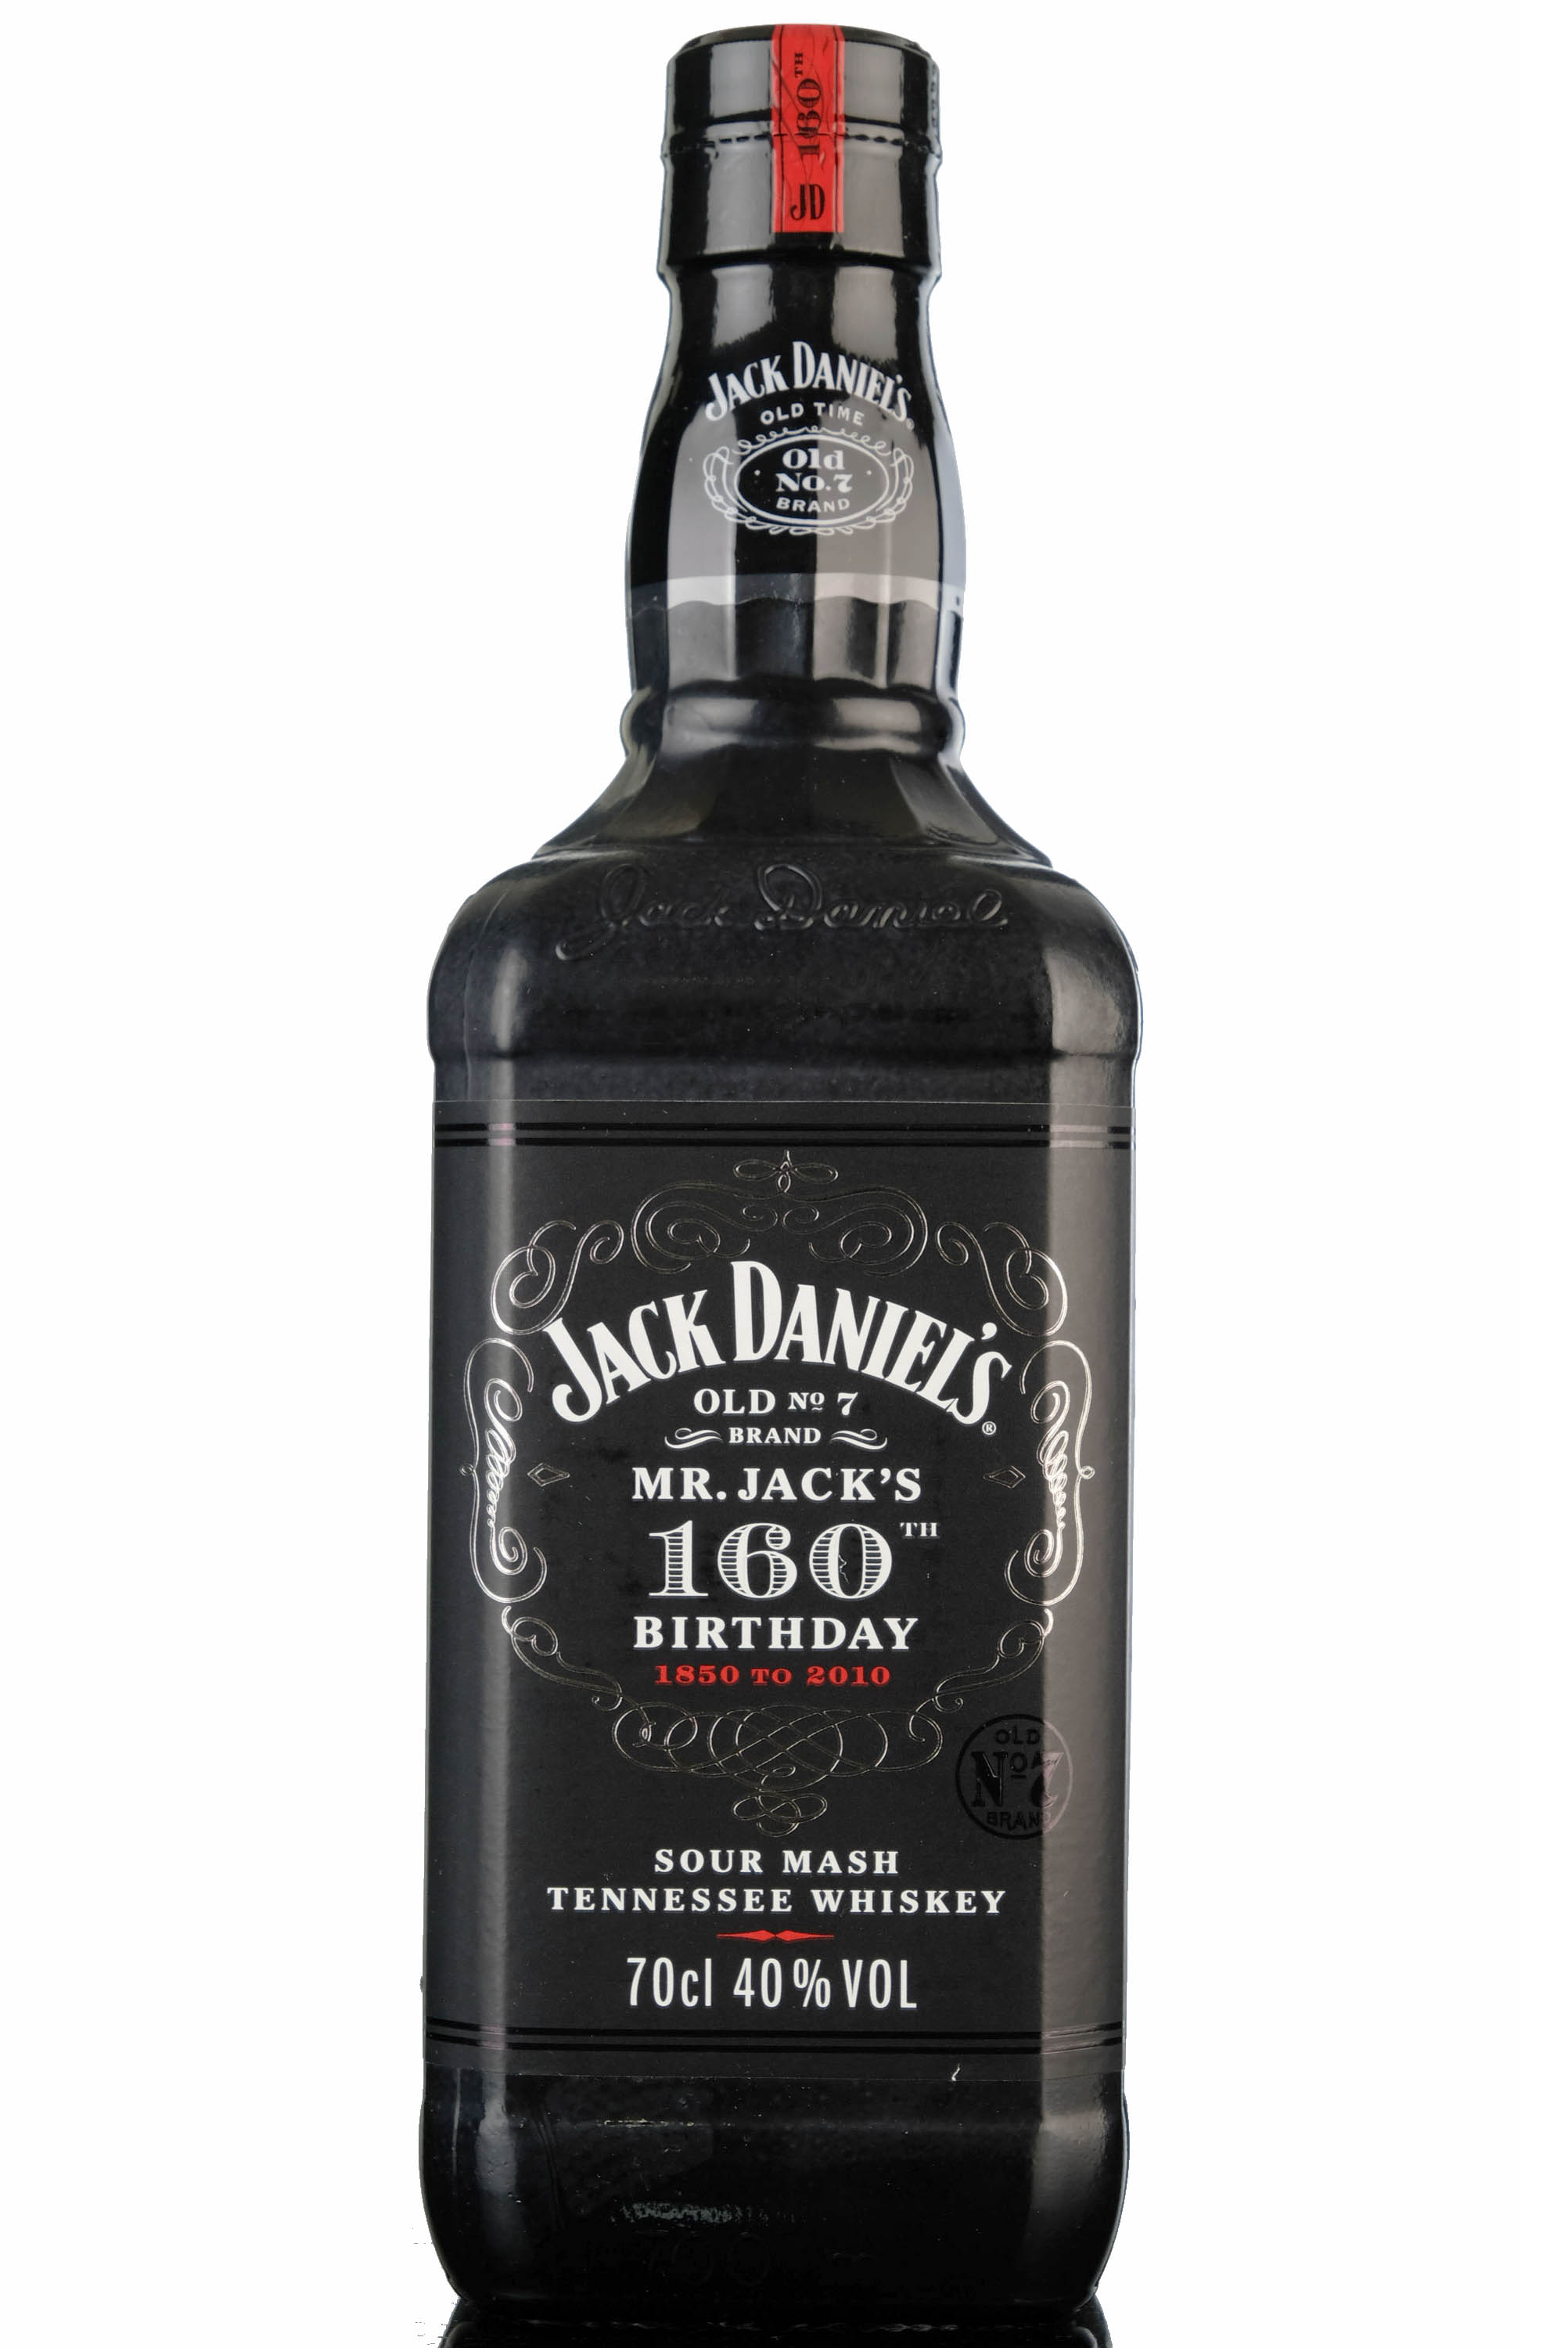 Jack Daniels 160th Birthday